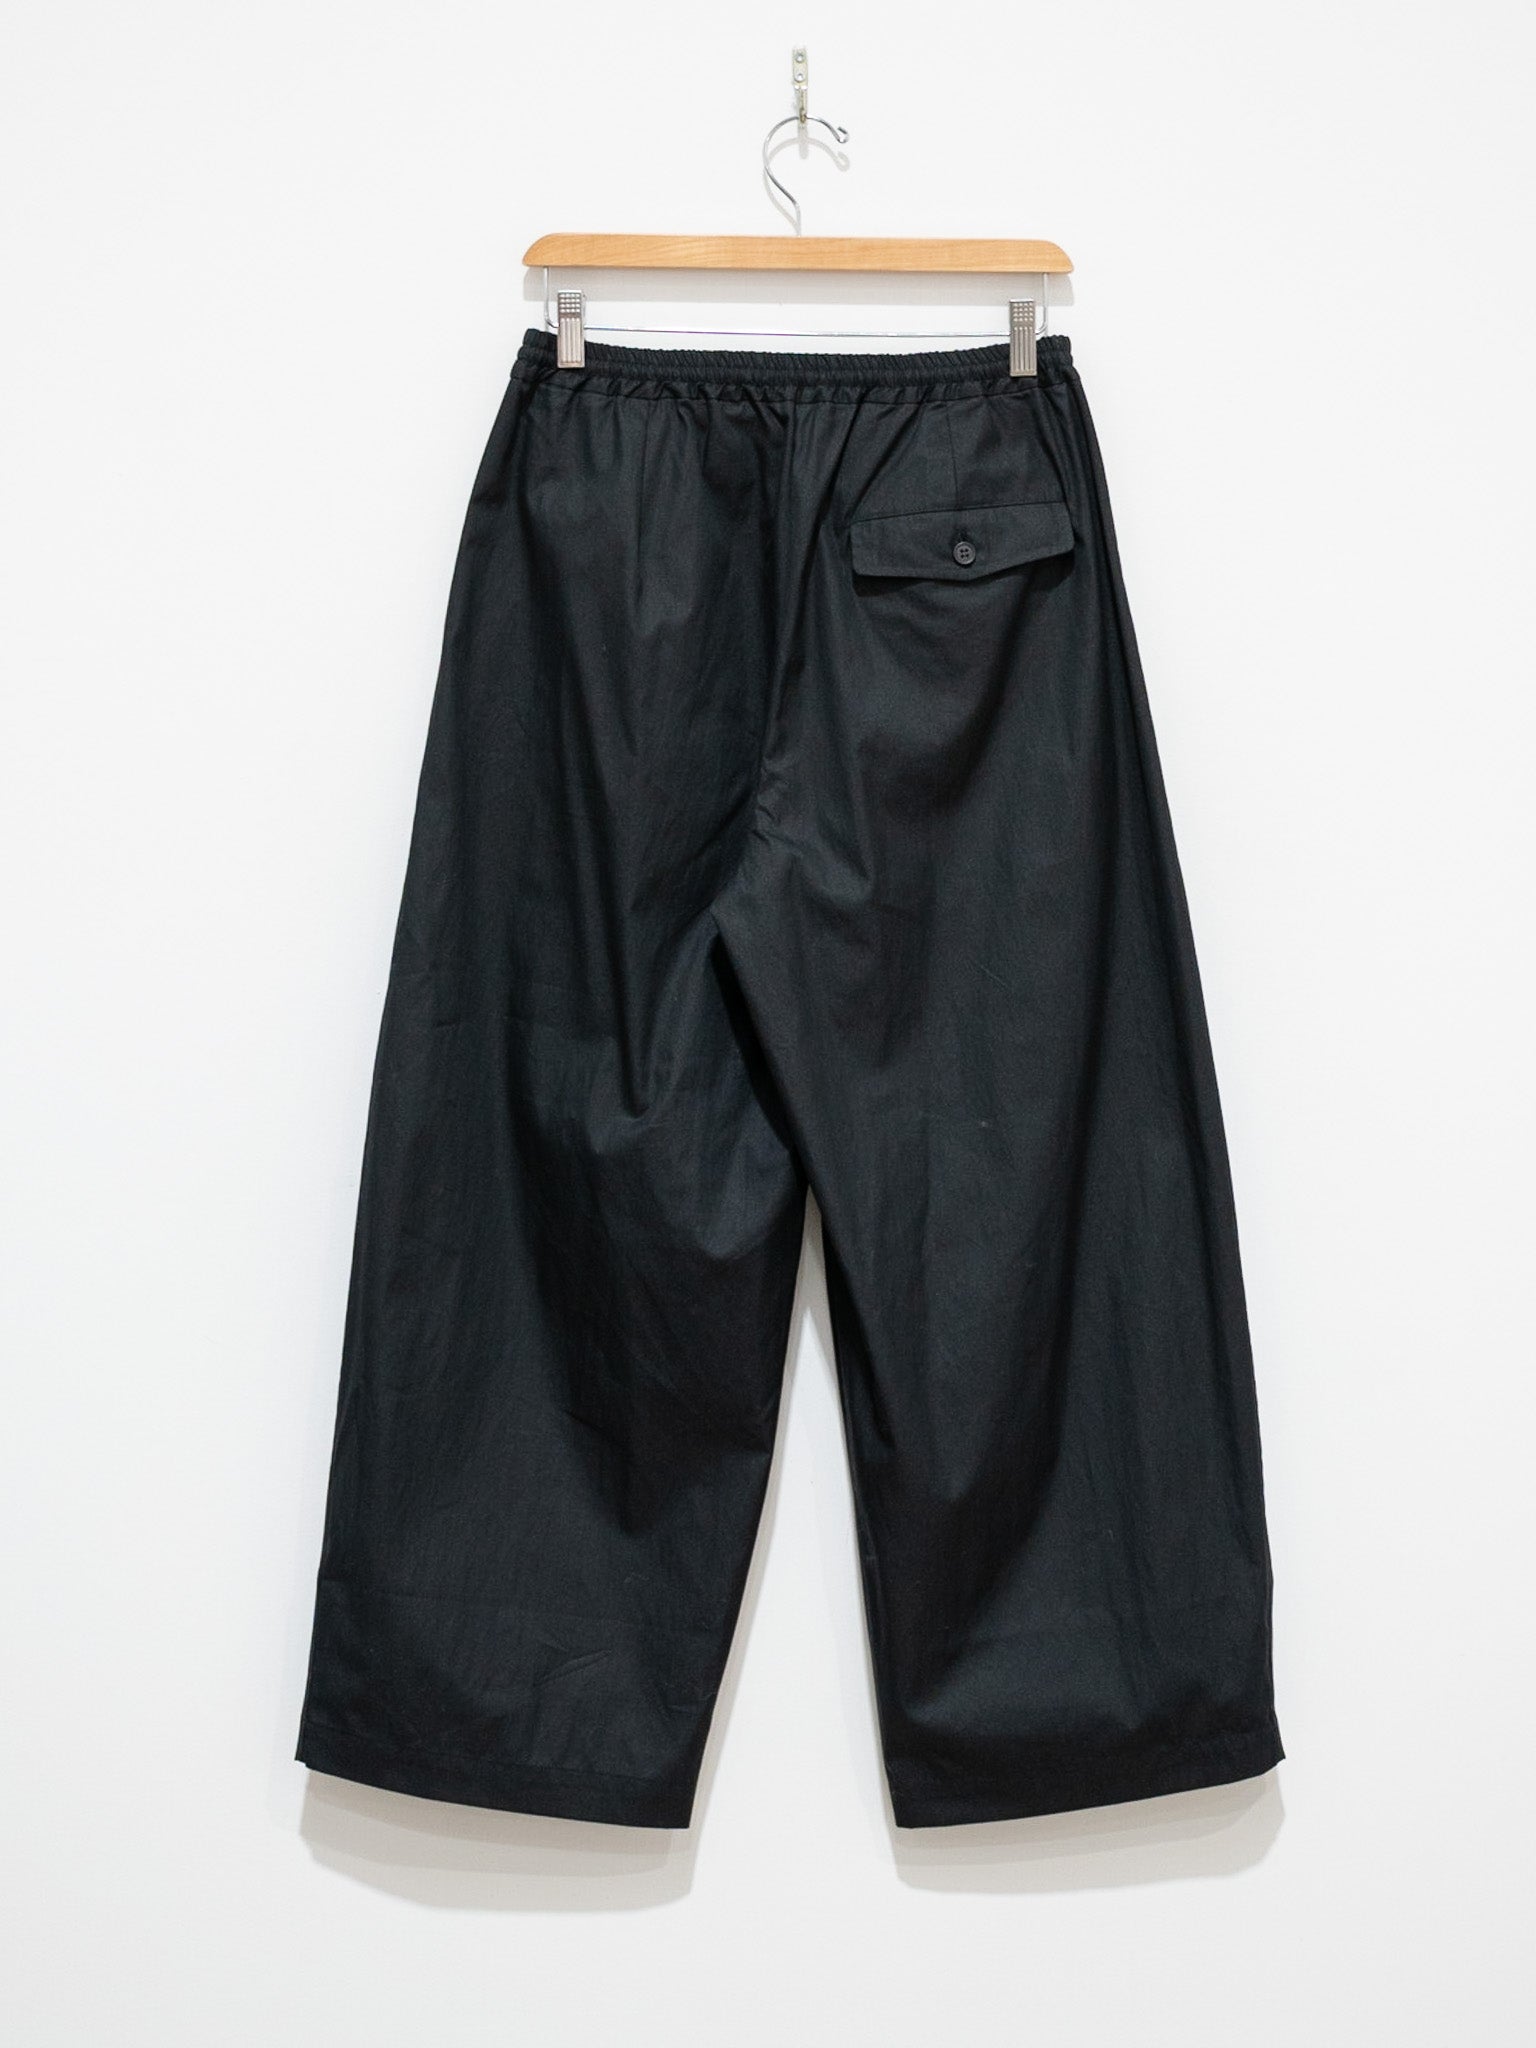 Namu Shop - Veritecoeur C/N Straight Pants - Black